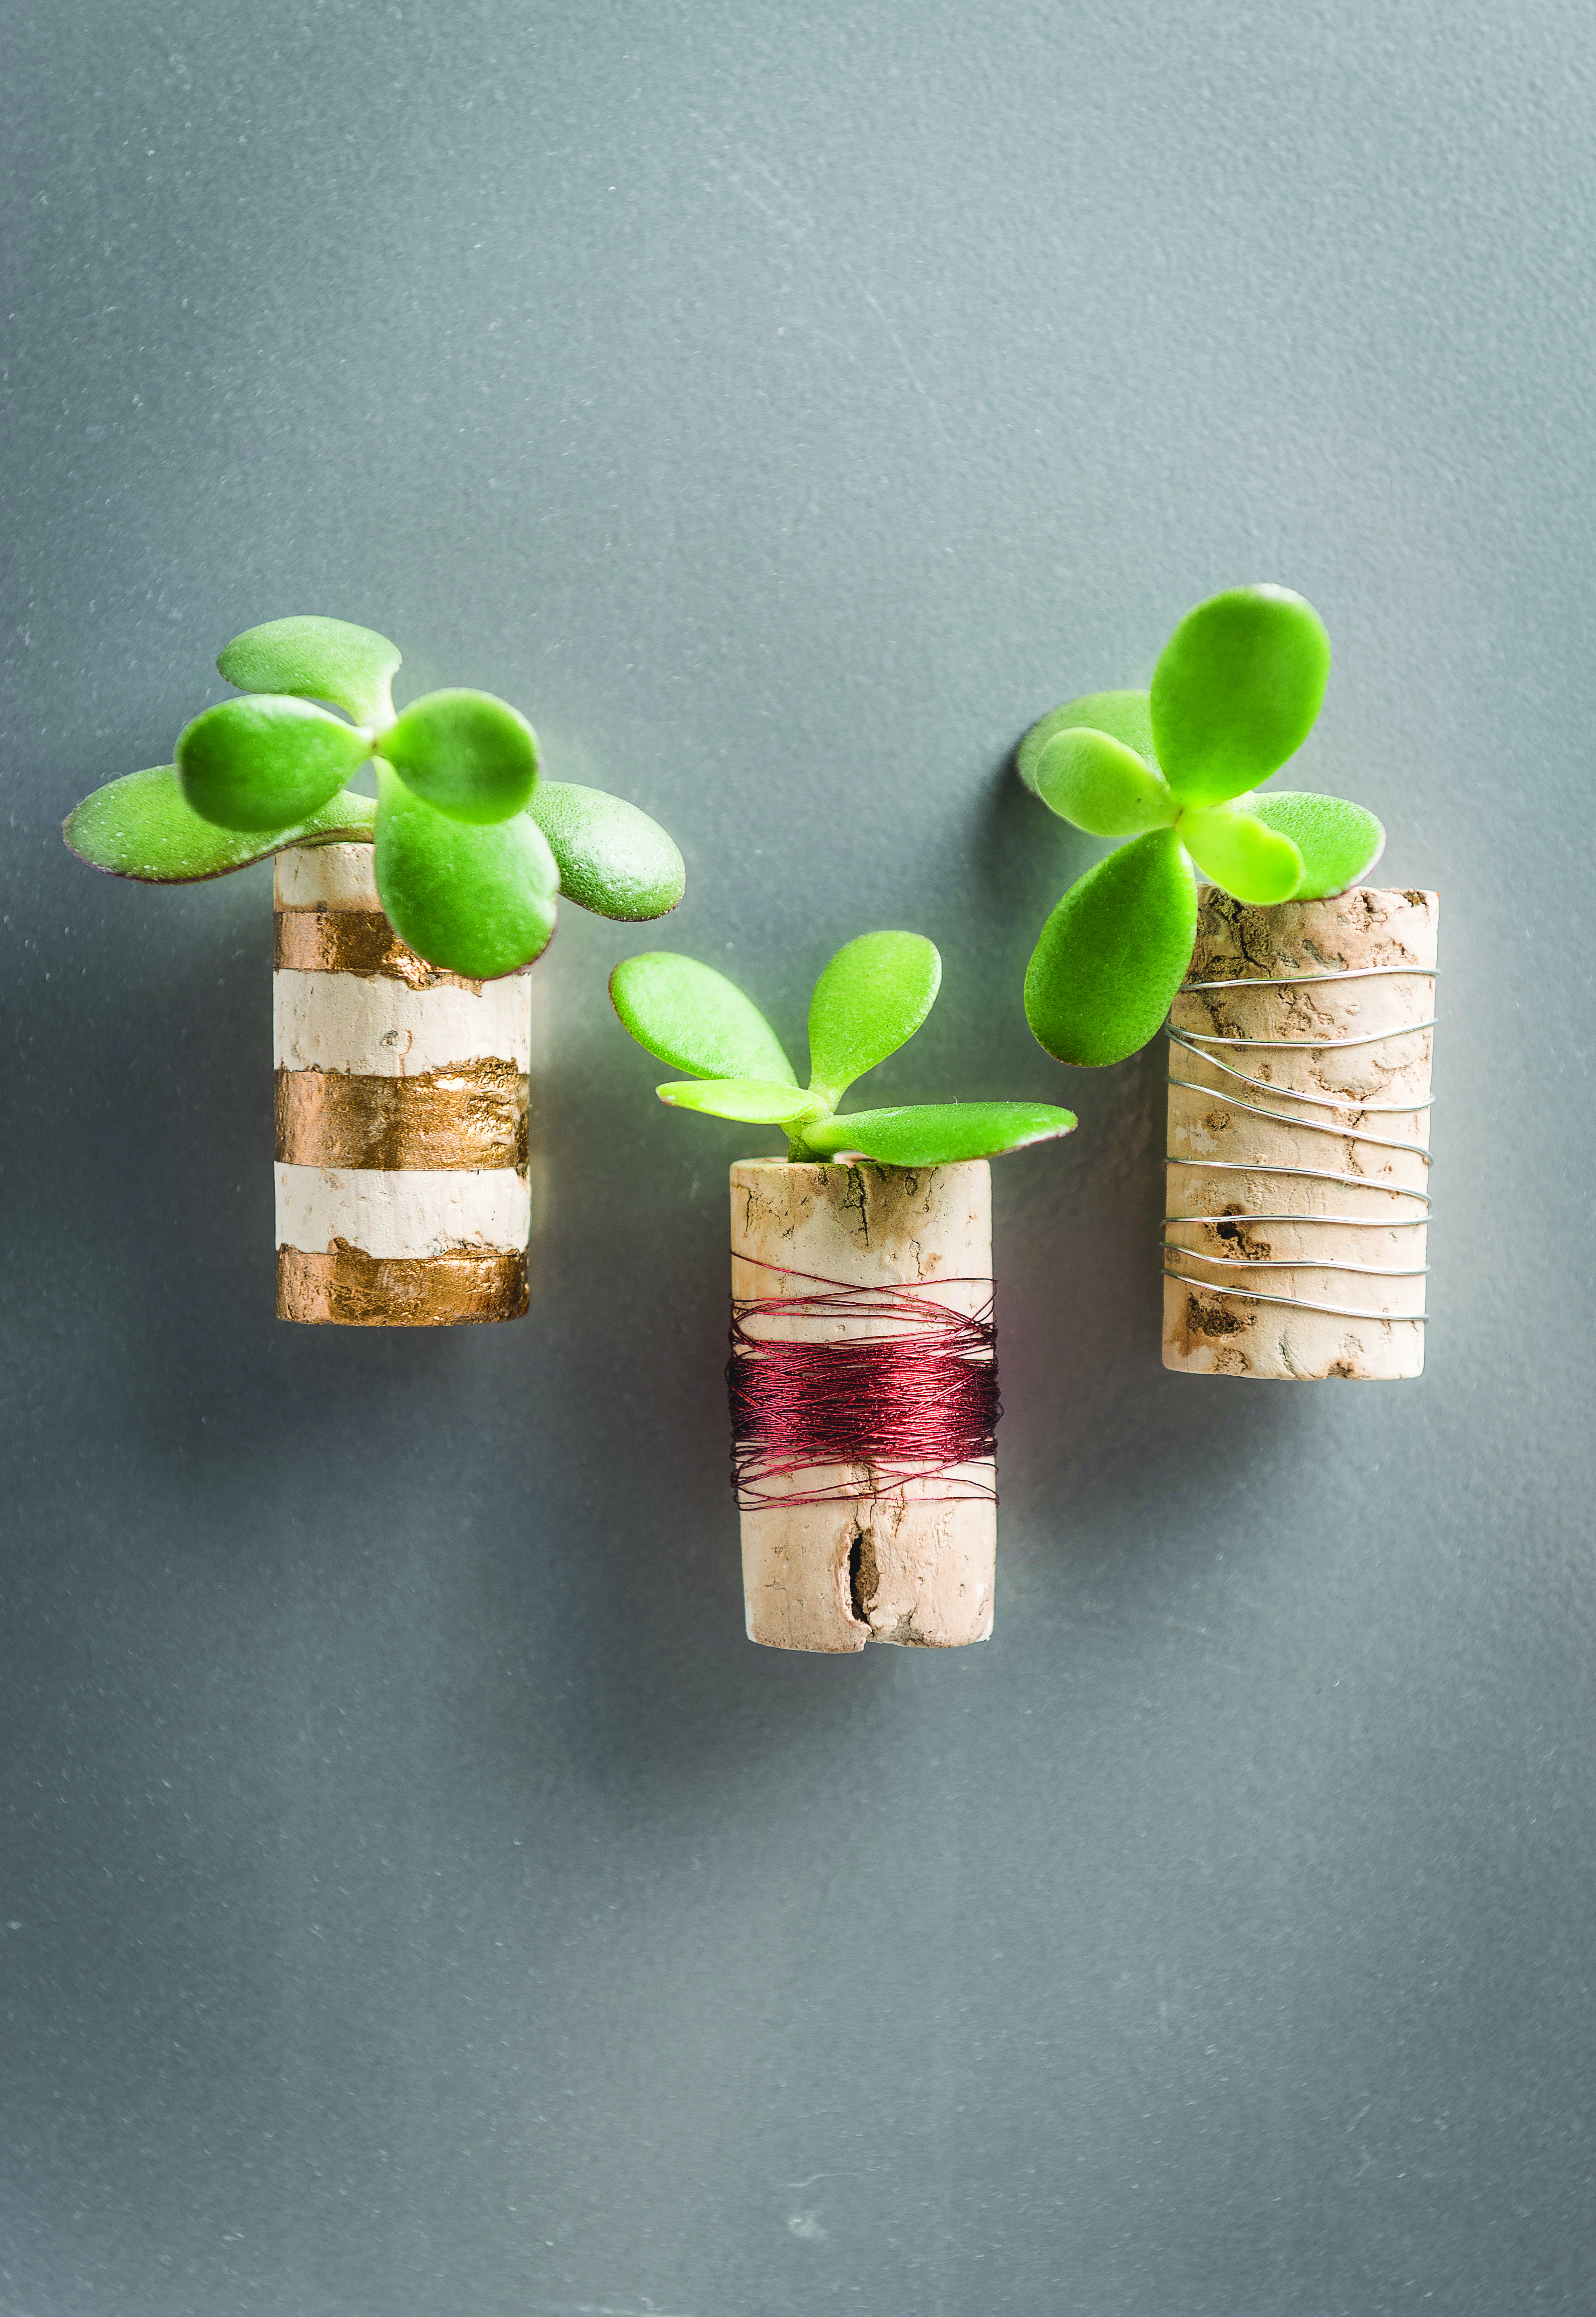 How to make cork planters – portrait